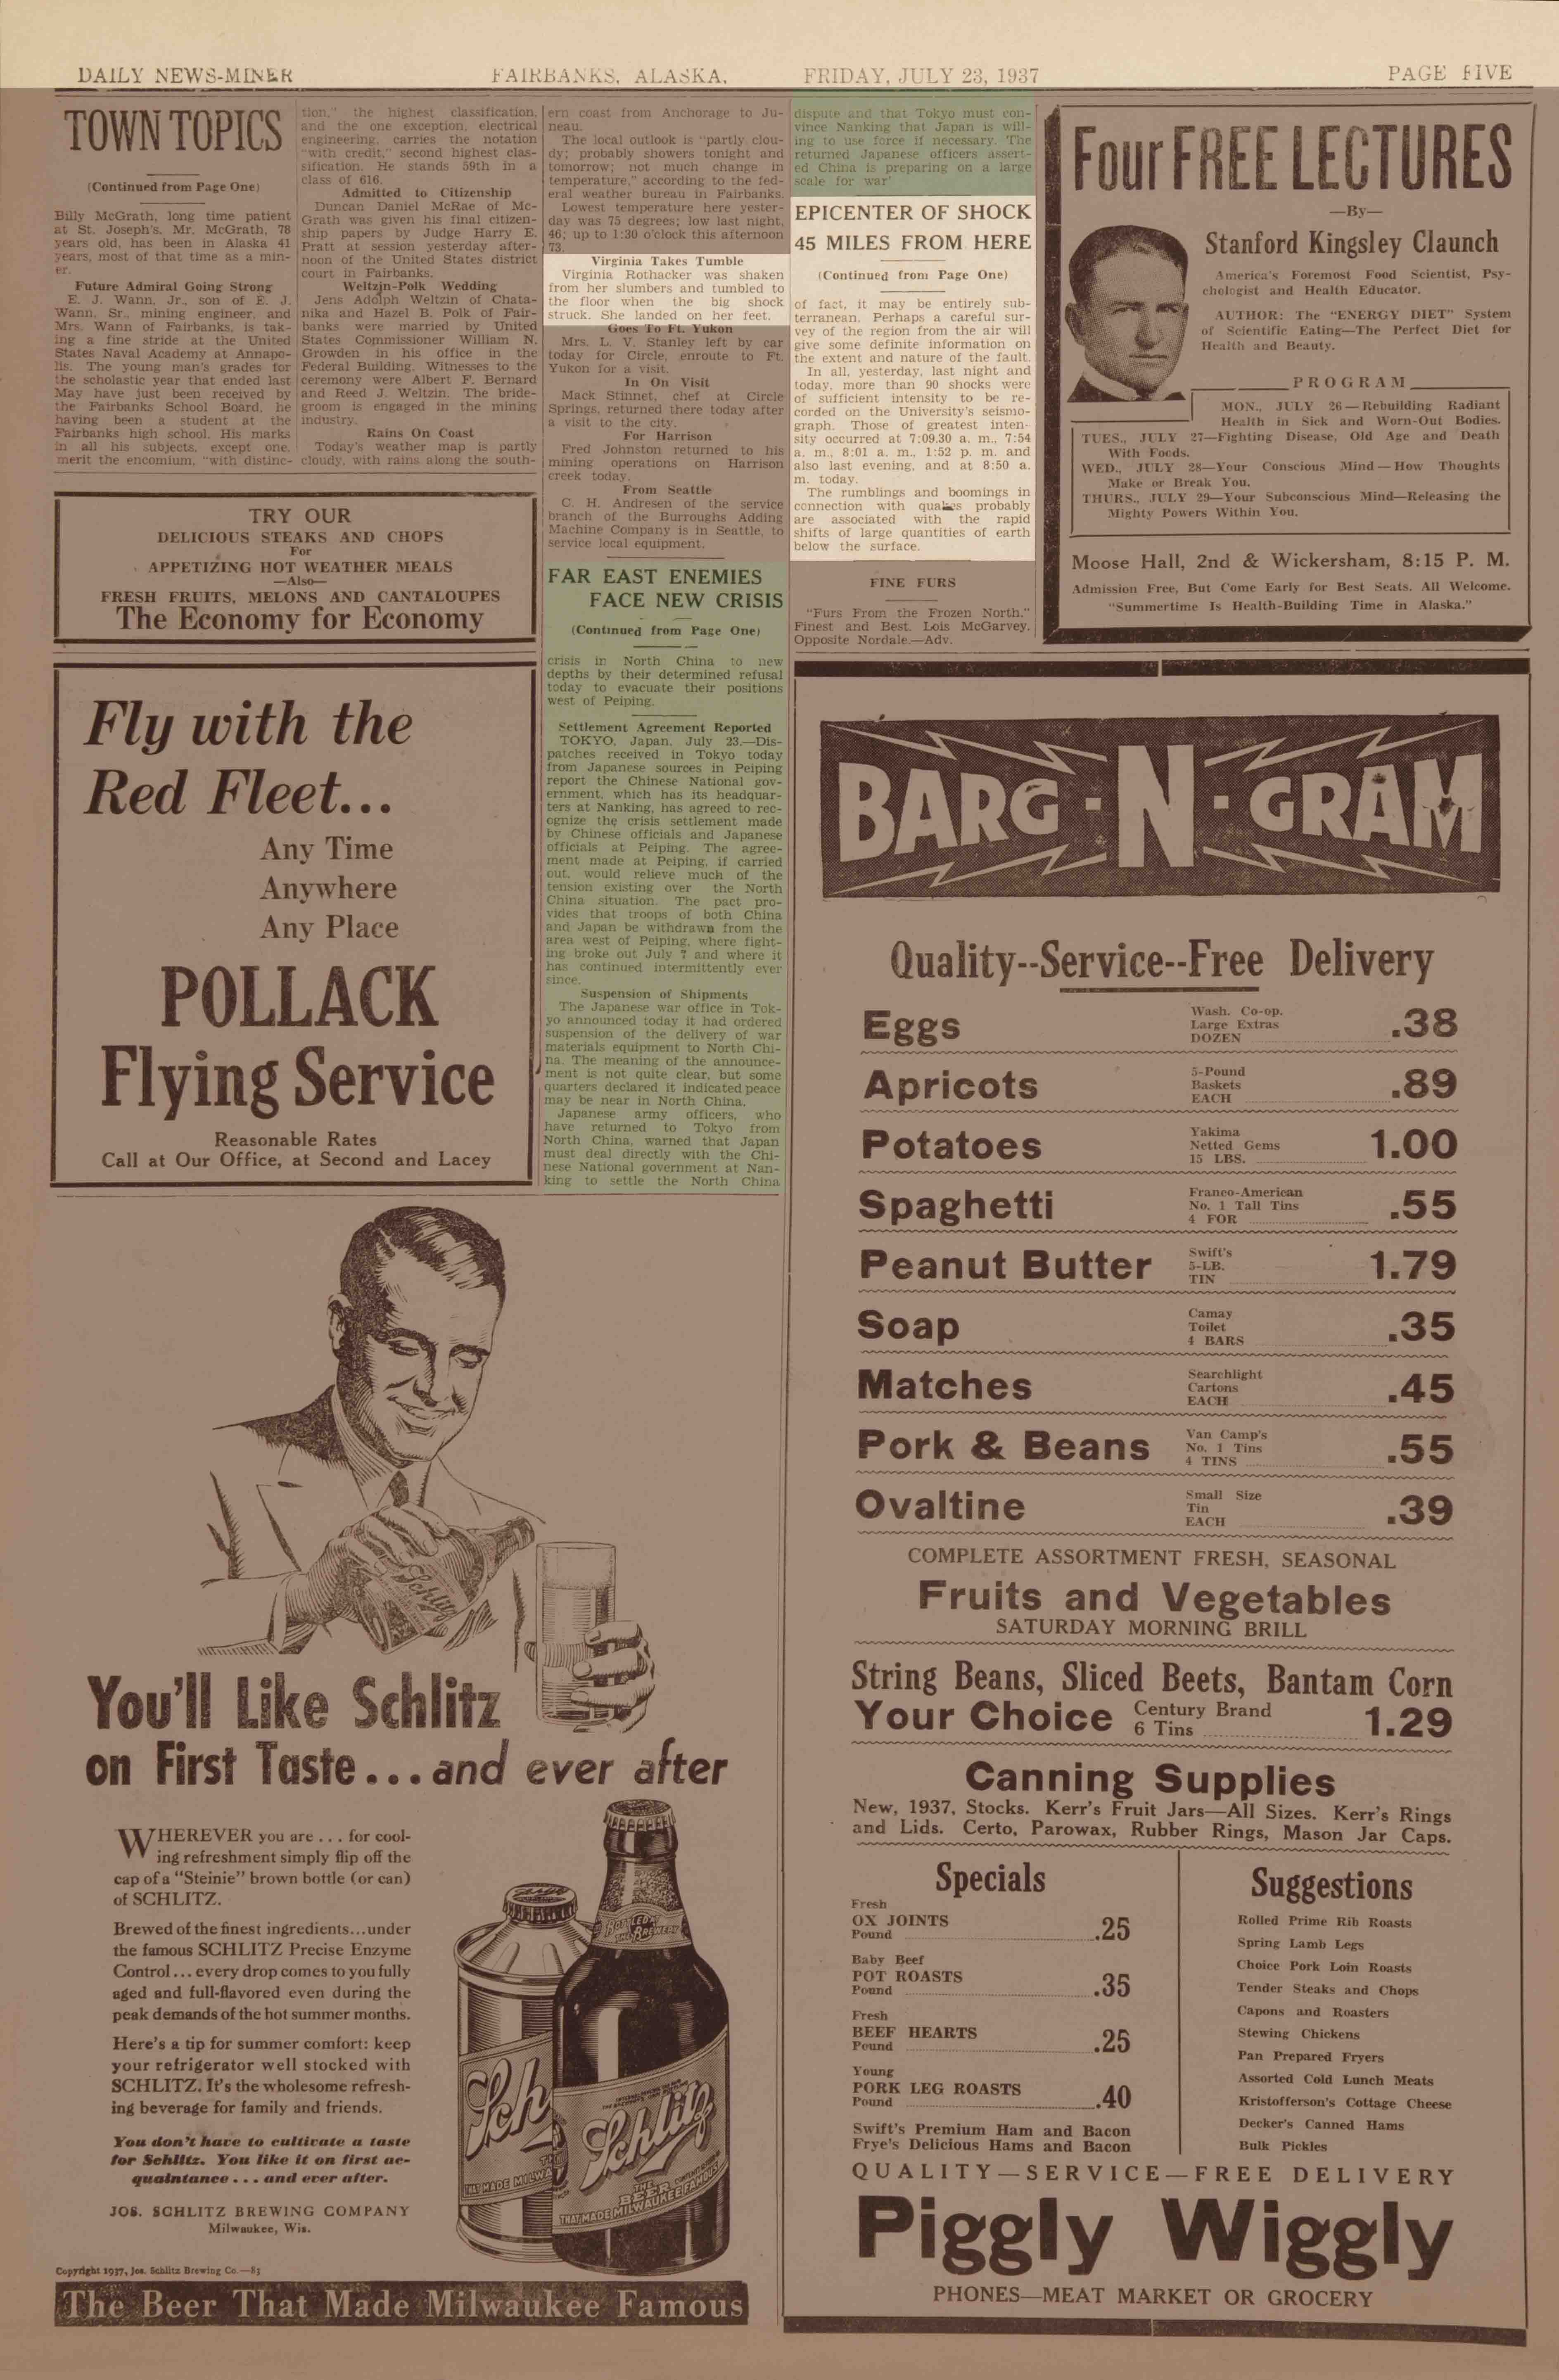 1937 July 23, Fairbanks Daily News-Miner (pg 5)